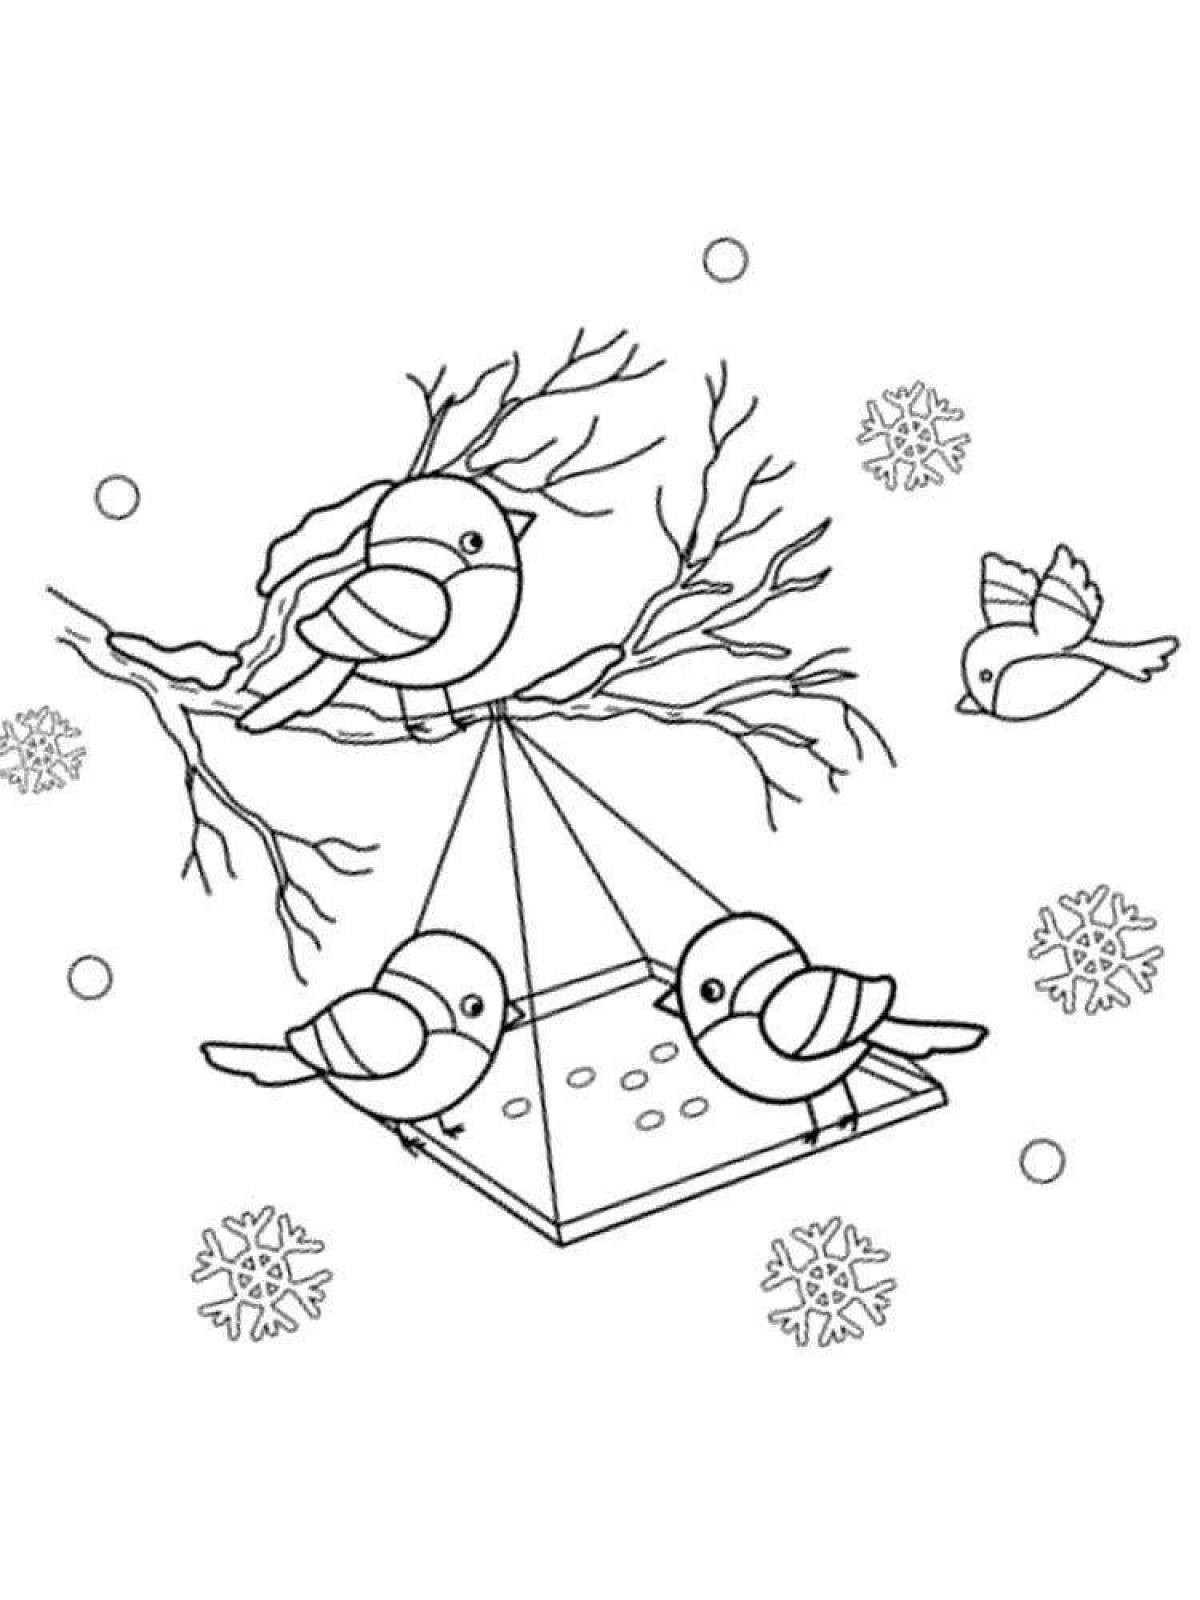 Splendid winter birds coloring page